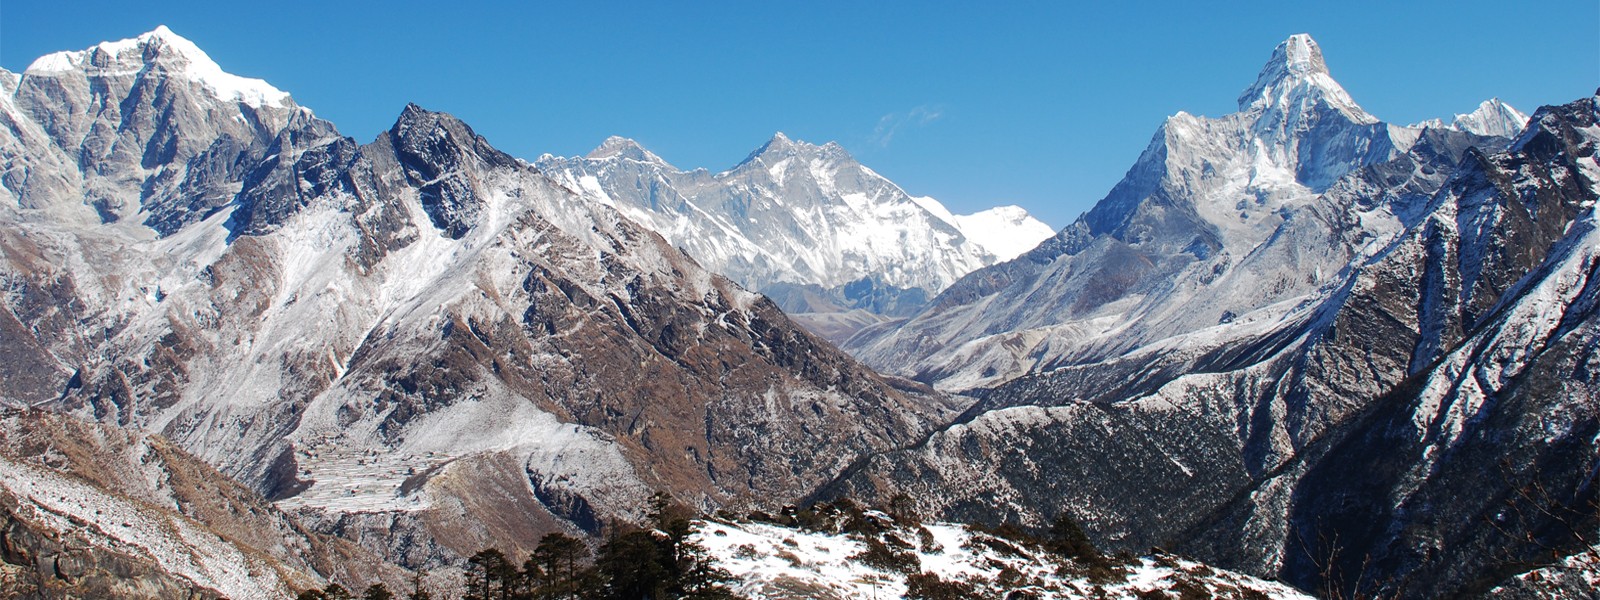 Mt. Taboche Peak and Ama Dablam Expedition